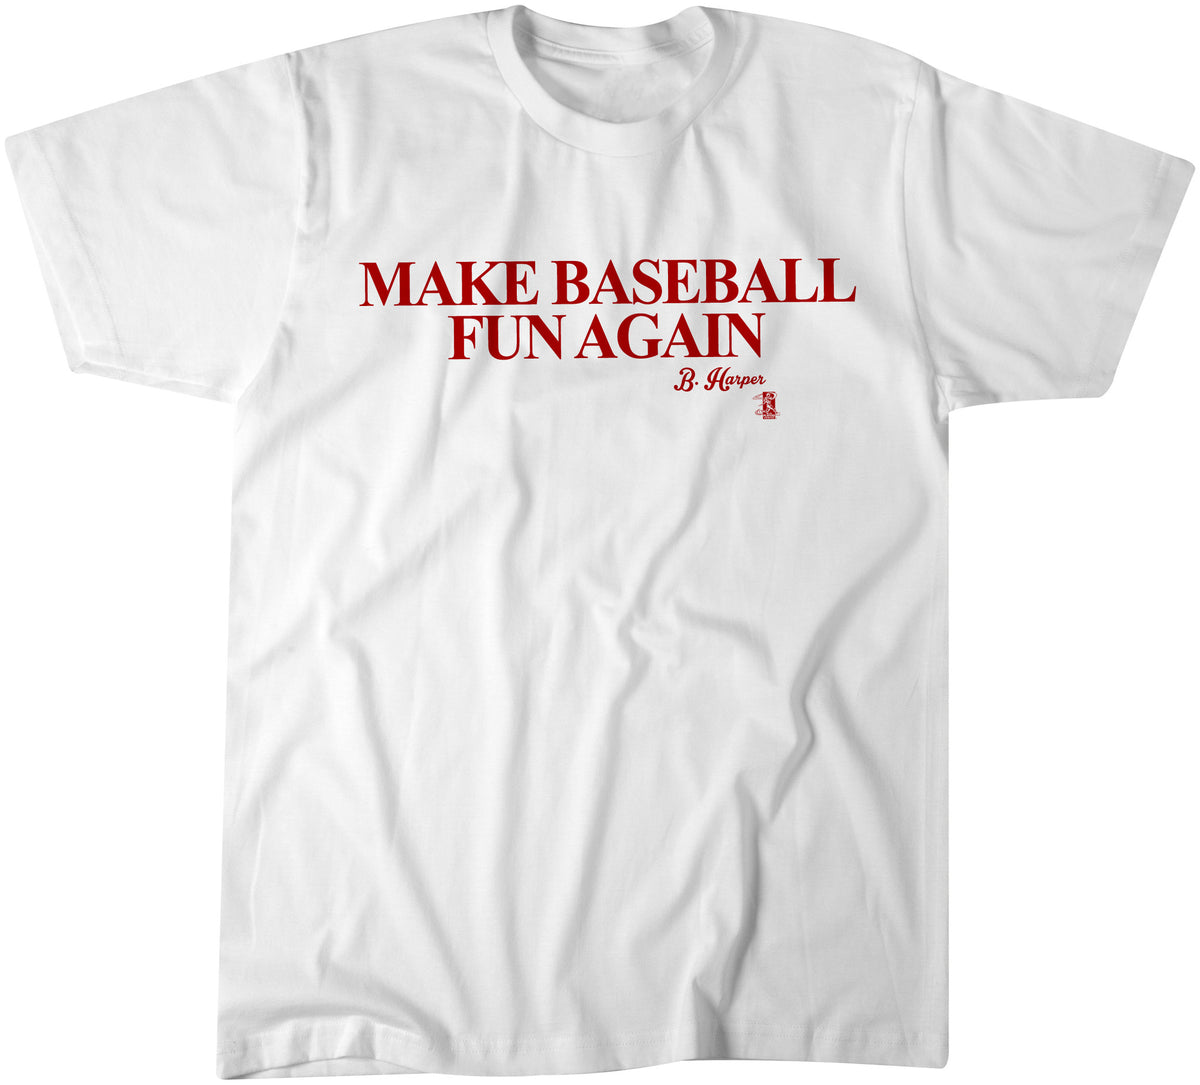 Grind The Pepper St. Louis, Adult T-Shirt / Small - MLB - Sports Fan Gear | breakingt